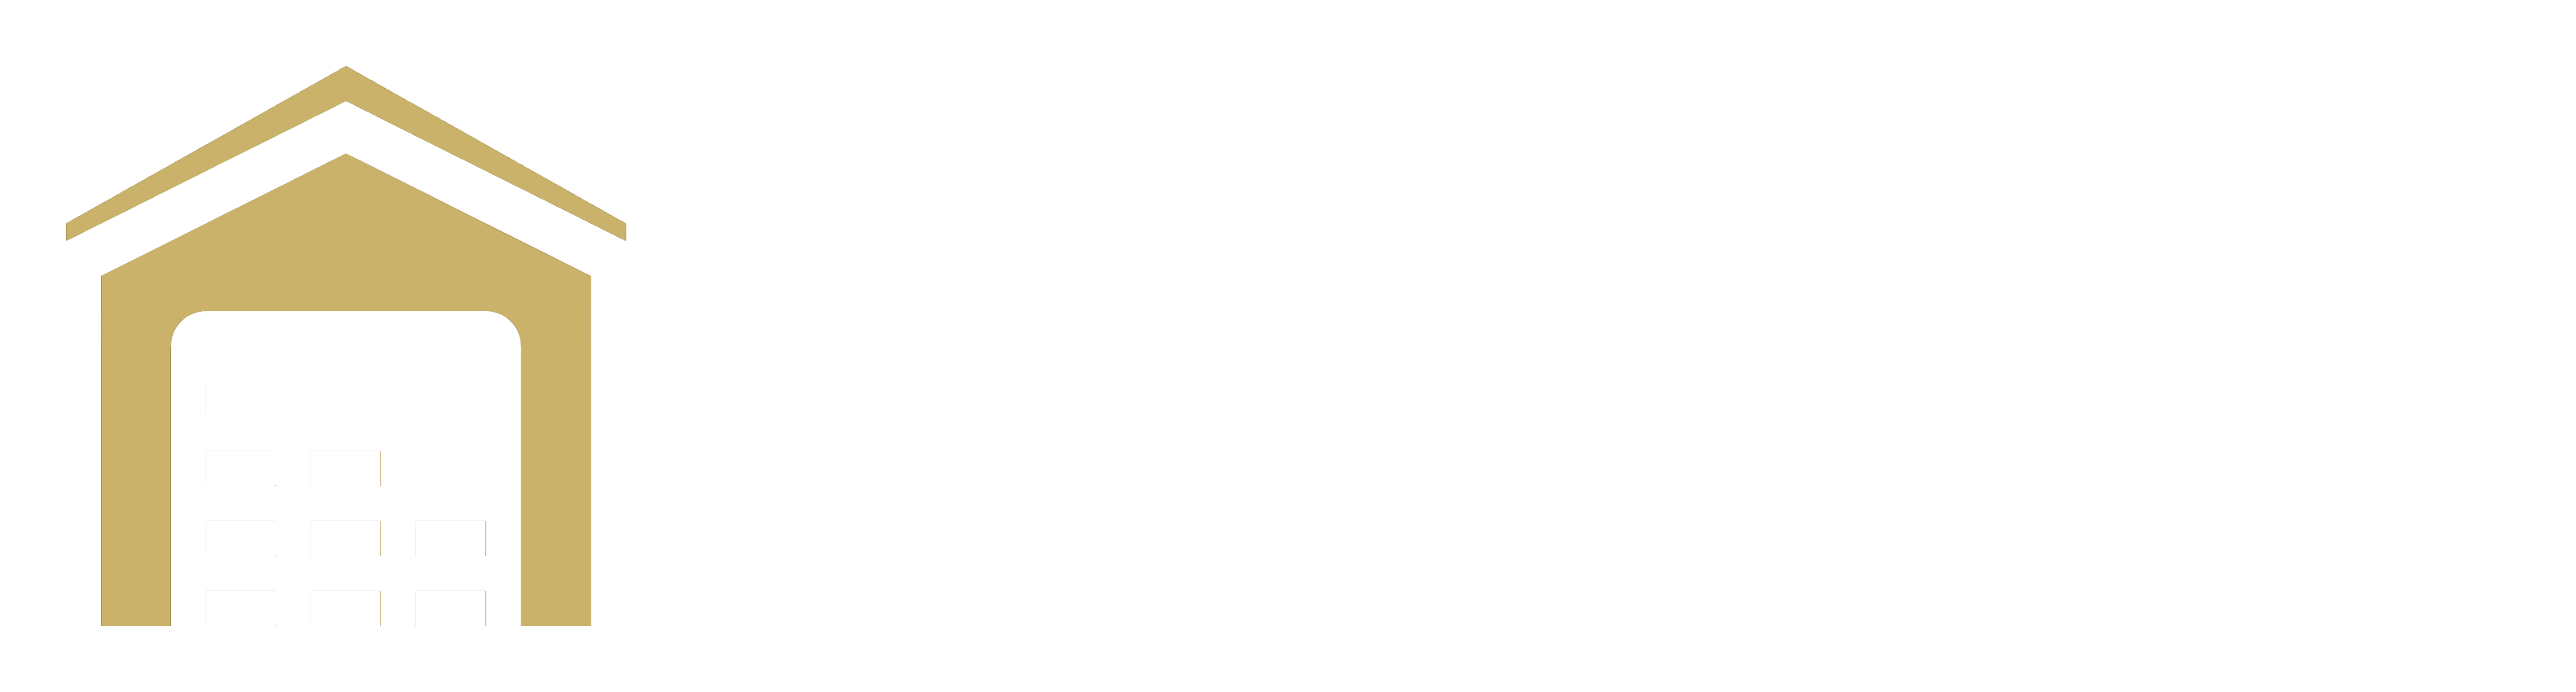 Quippy's